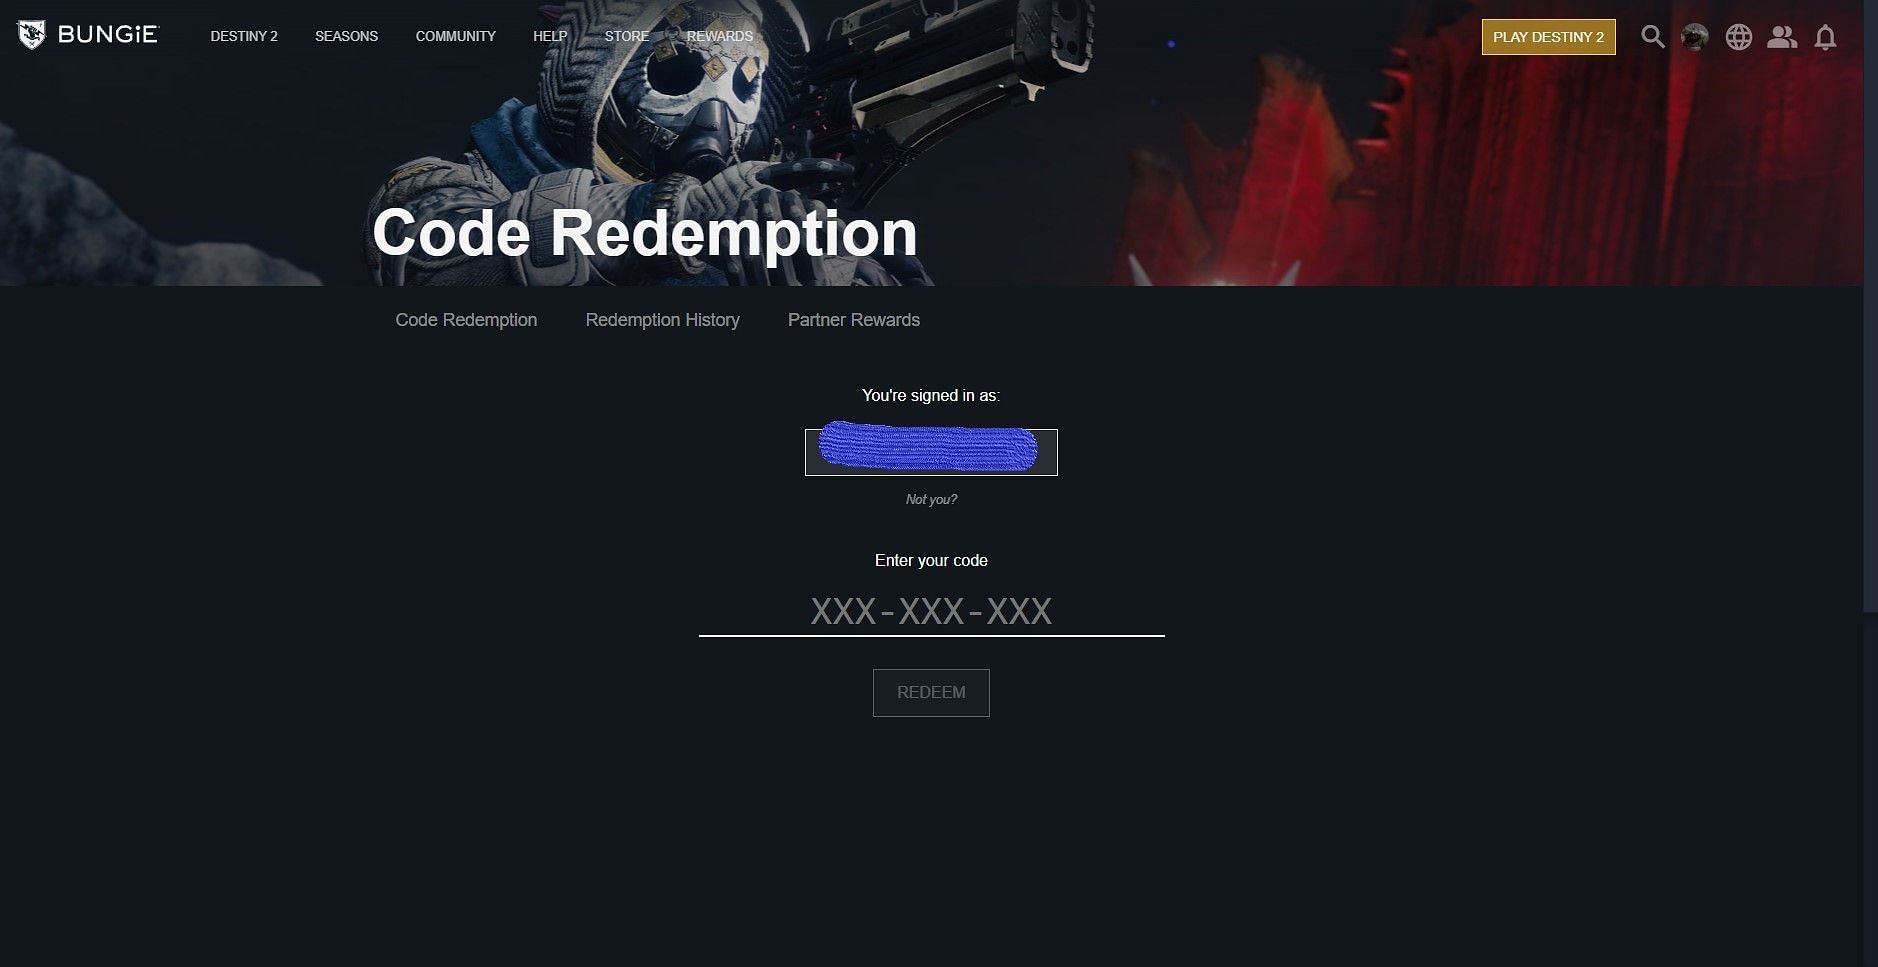 Destiny 2 code redemption page on the Bungie website (Image via Bungie)